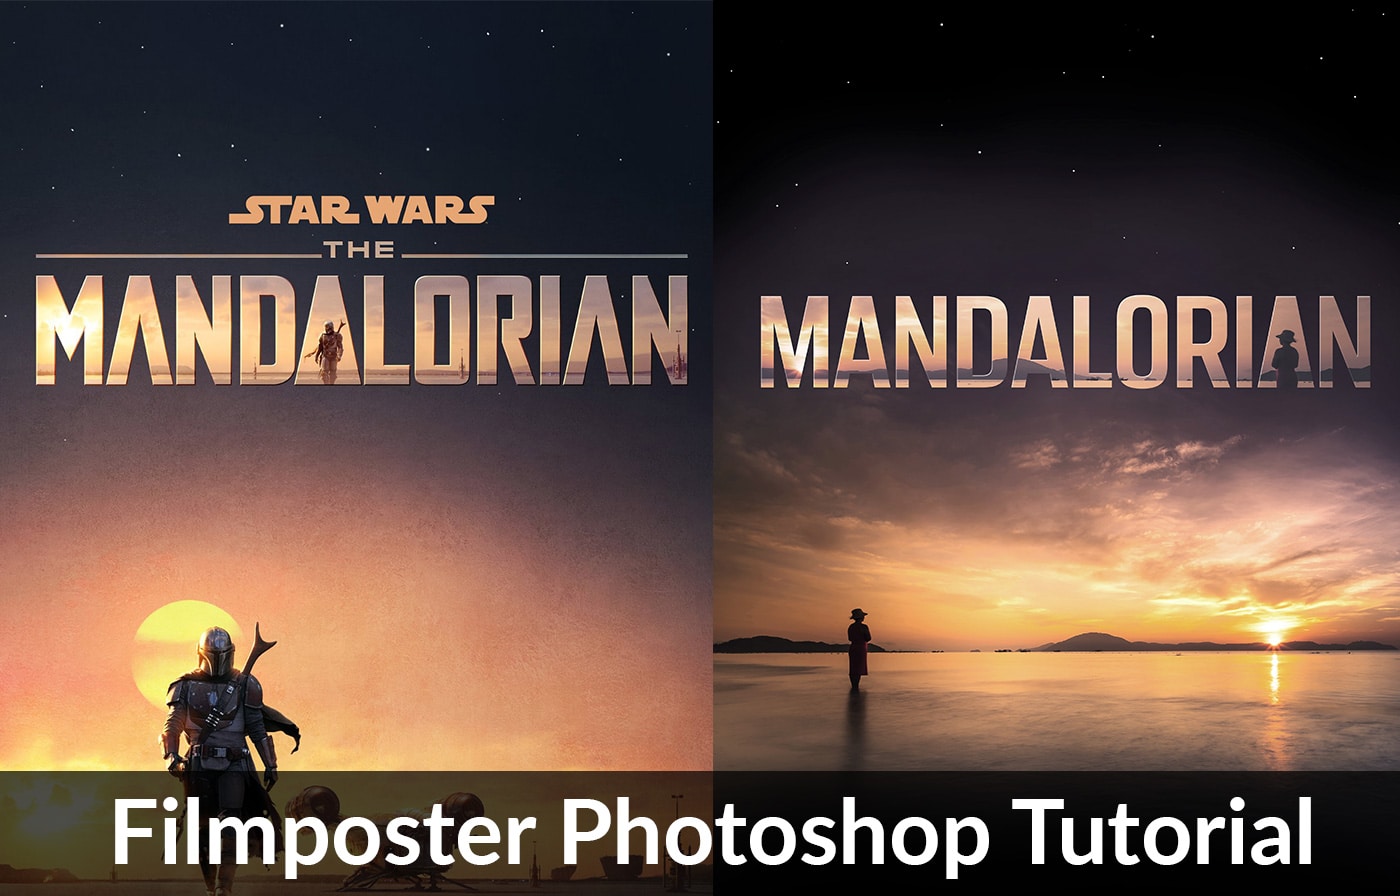 The Mandalorian Filmposter Photoshop Tutorial